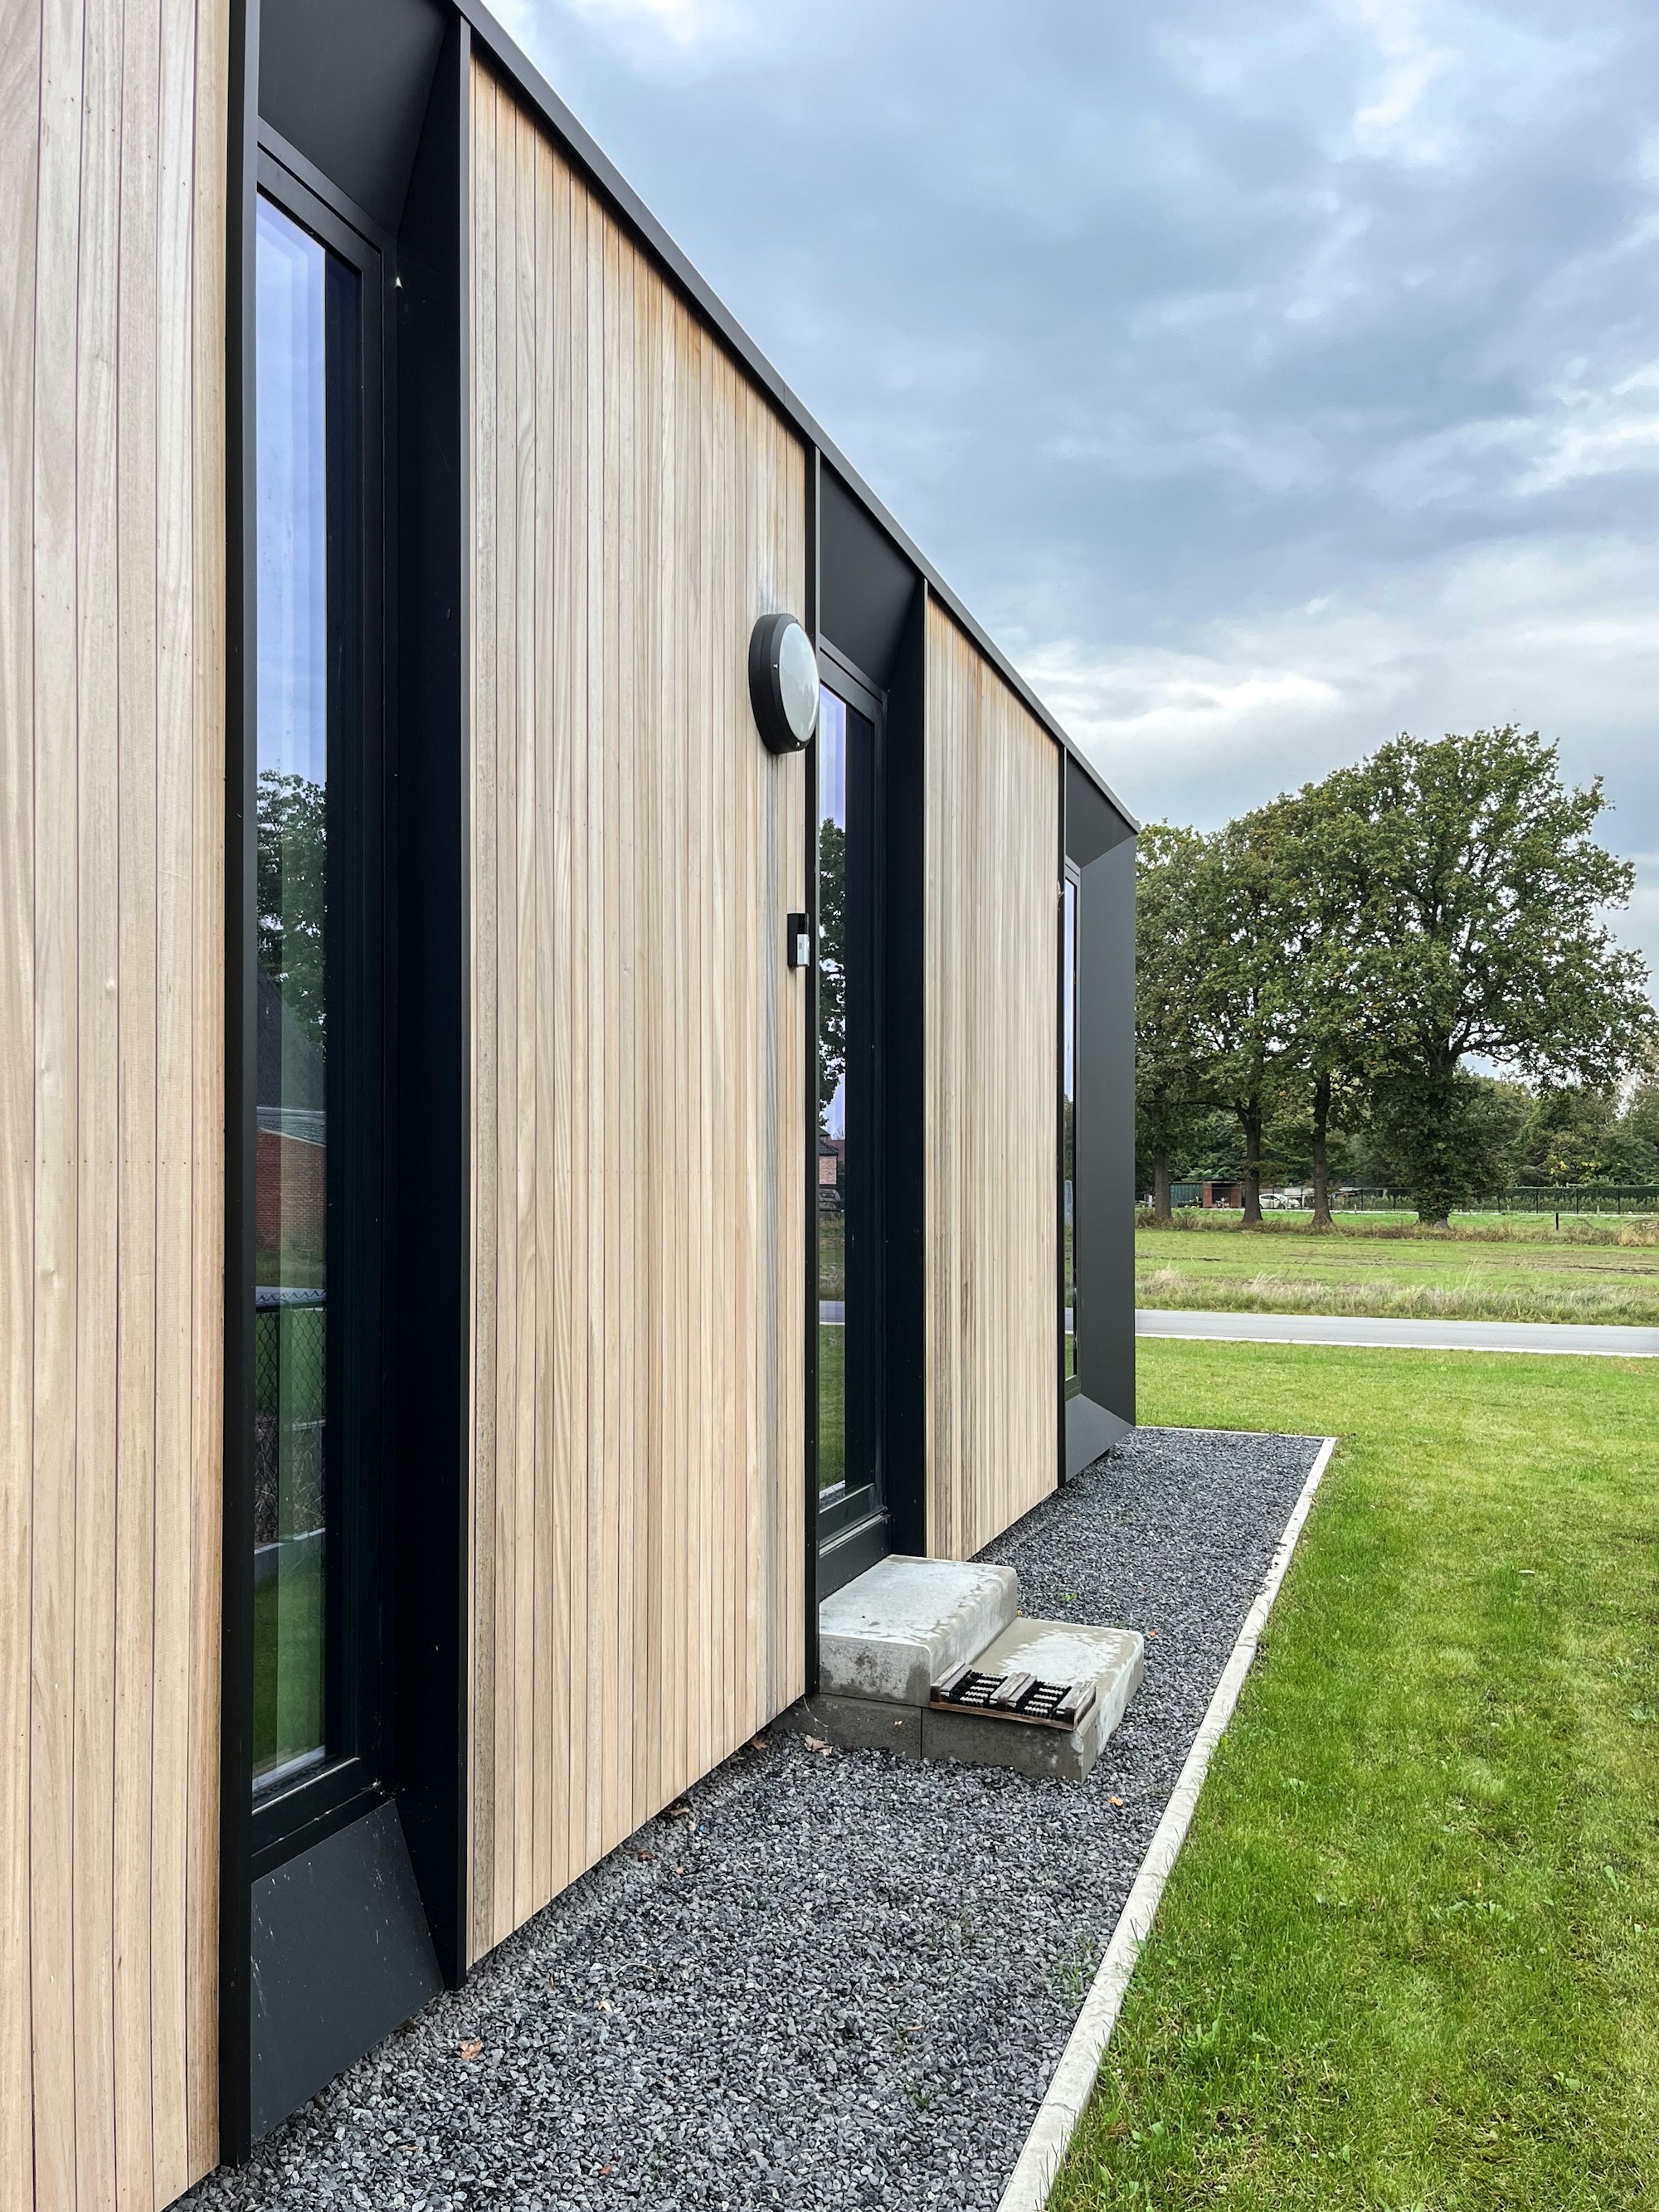 Skilpod #108 — houtskeletbouw bungalow woning met 2 slaapkamers, modern design in natuurhout